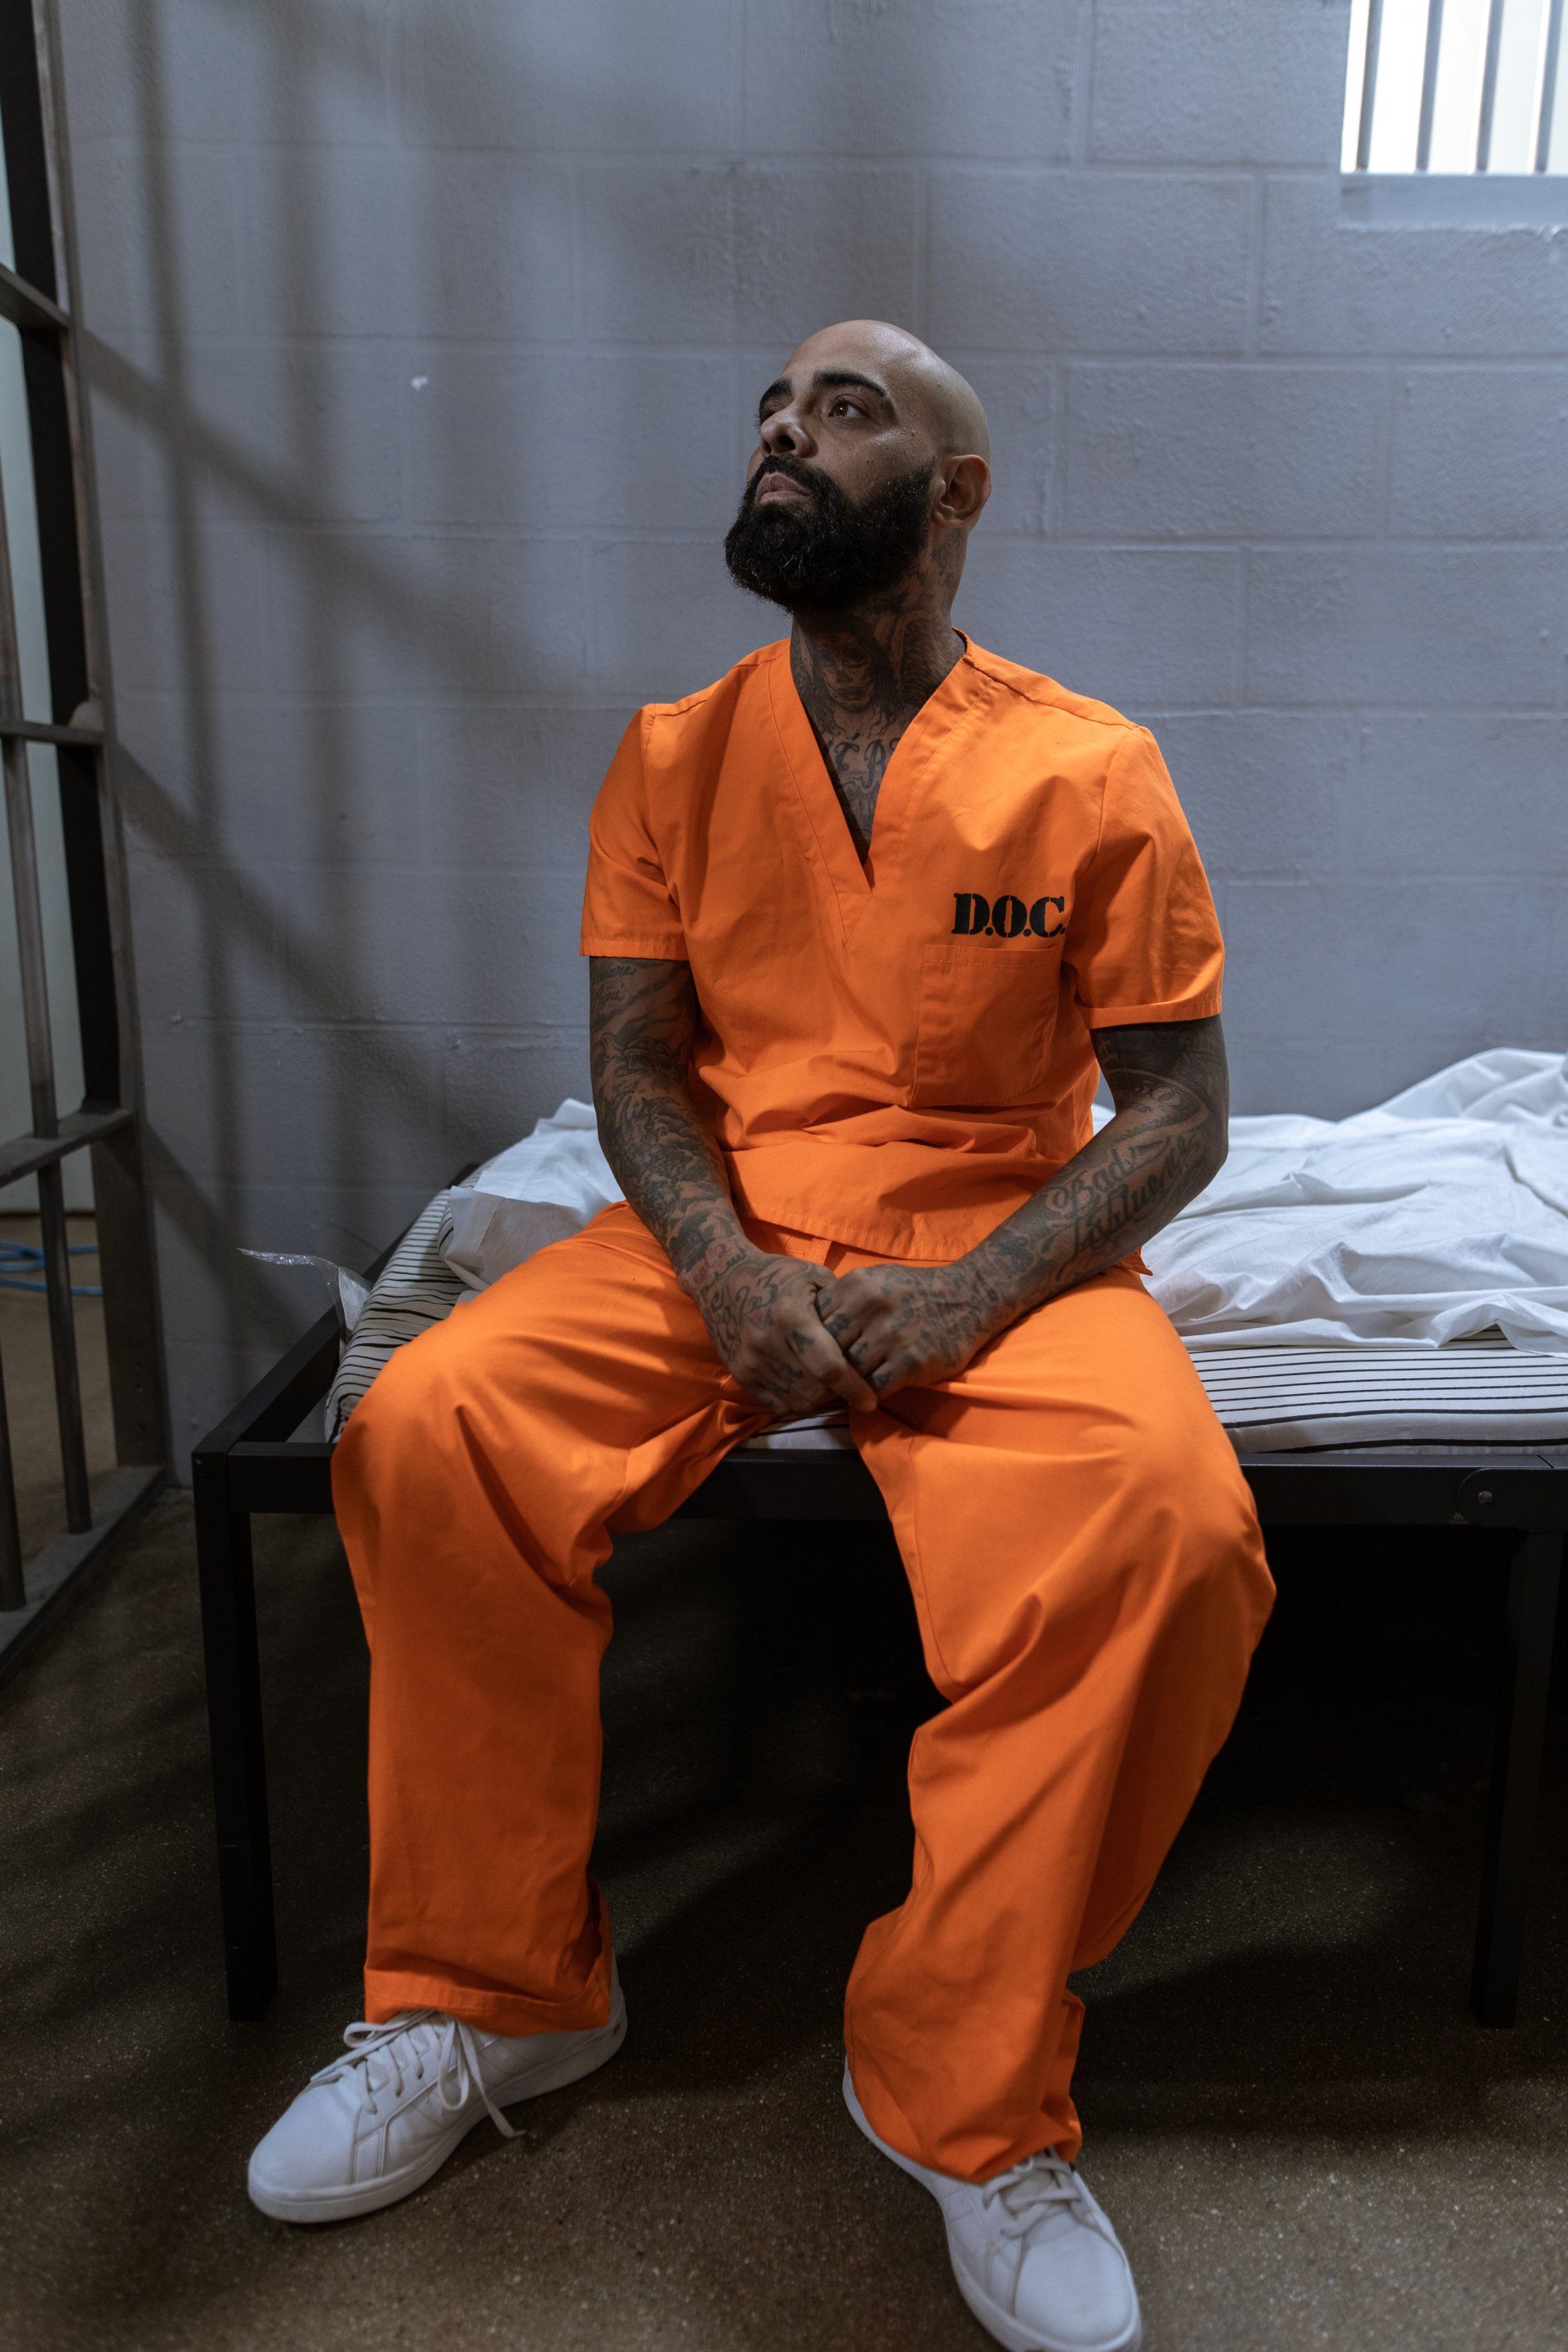 Prisoner sitting in a prison on bunk